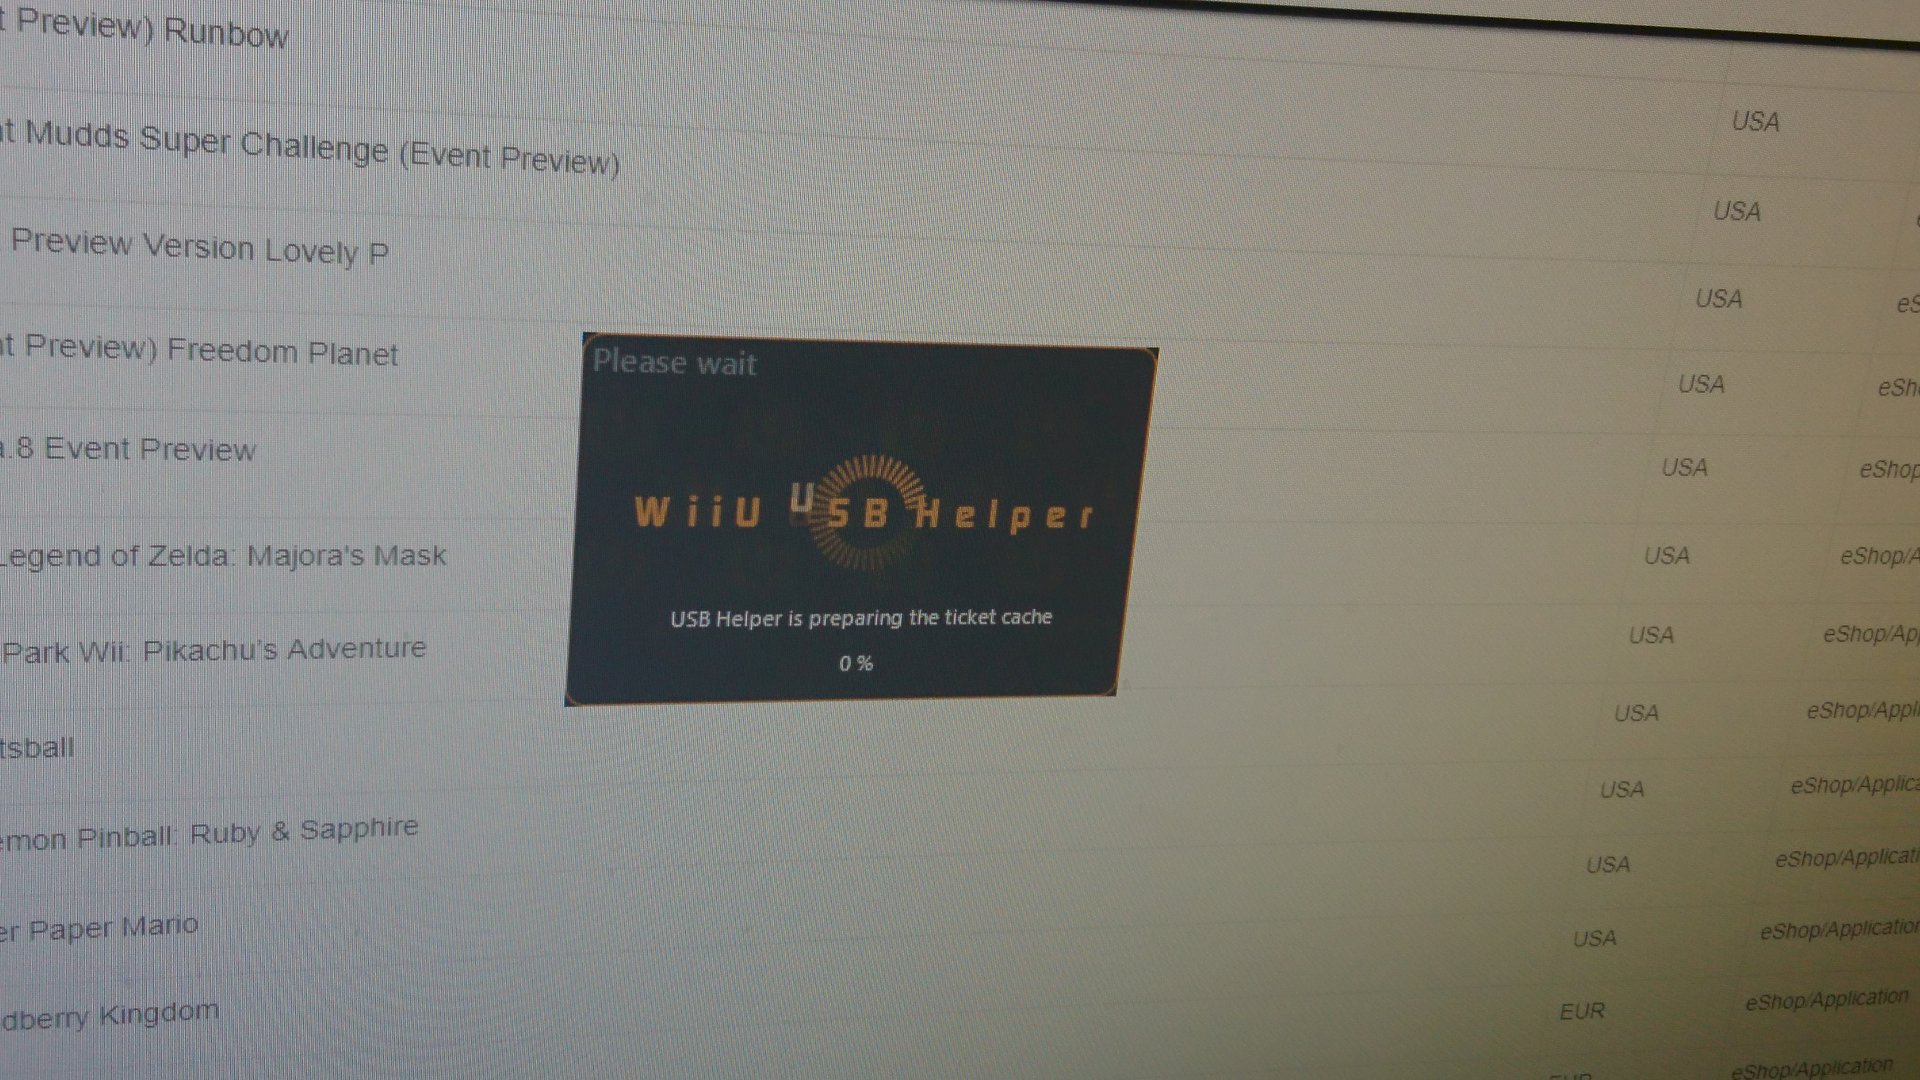 Wii U Usb Helper Ticket Cache At 0 For Half An Hour Consoleshub